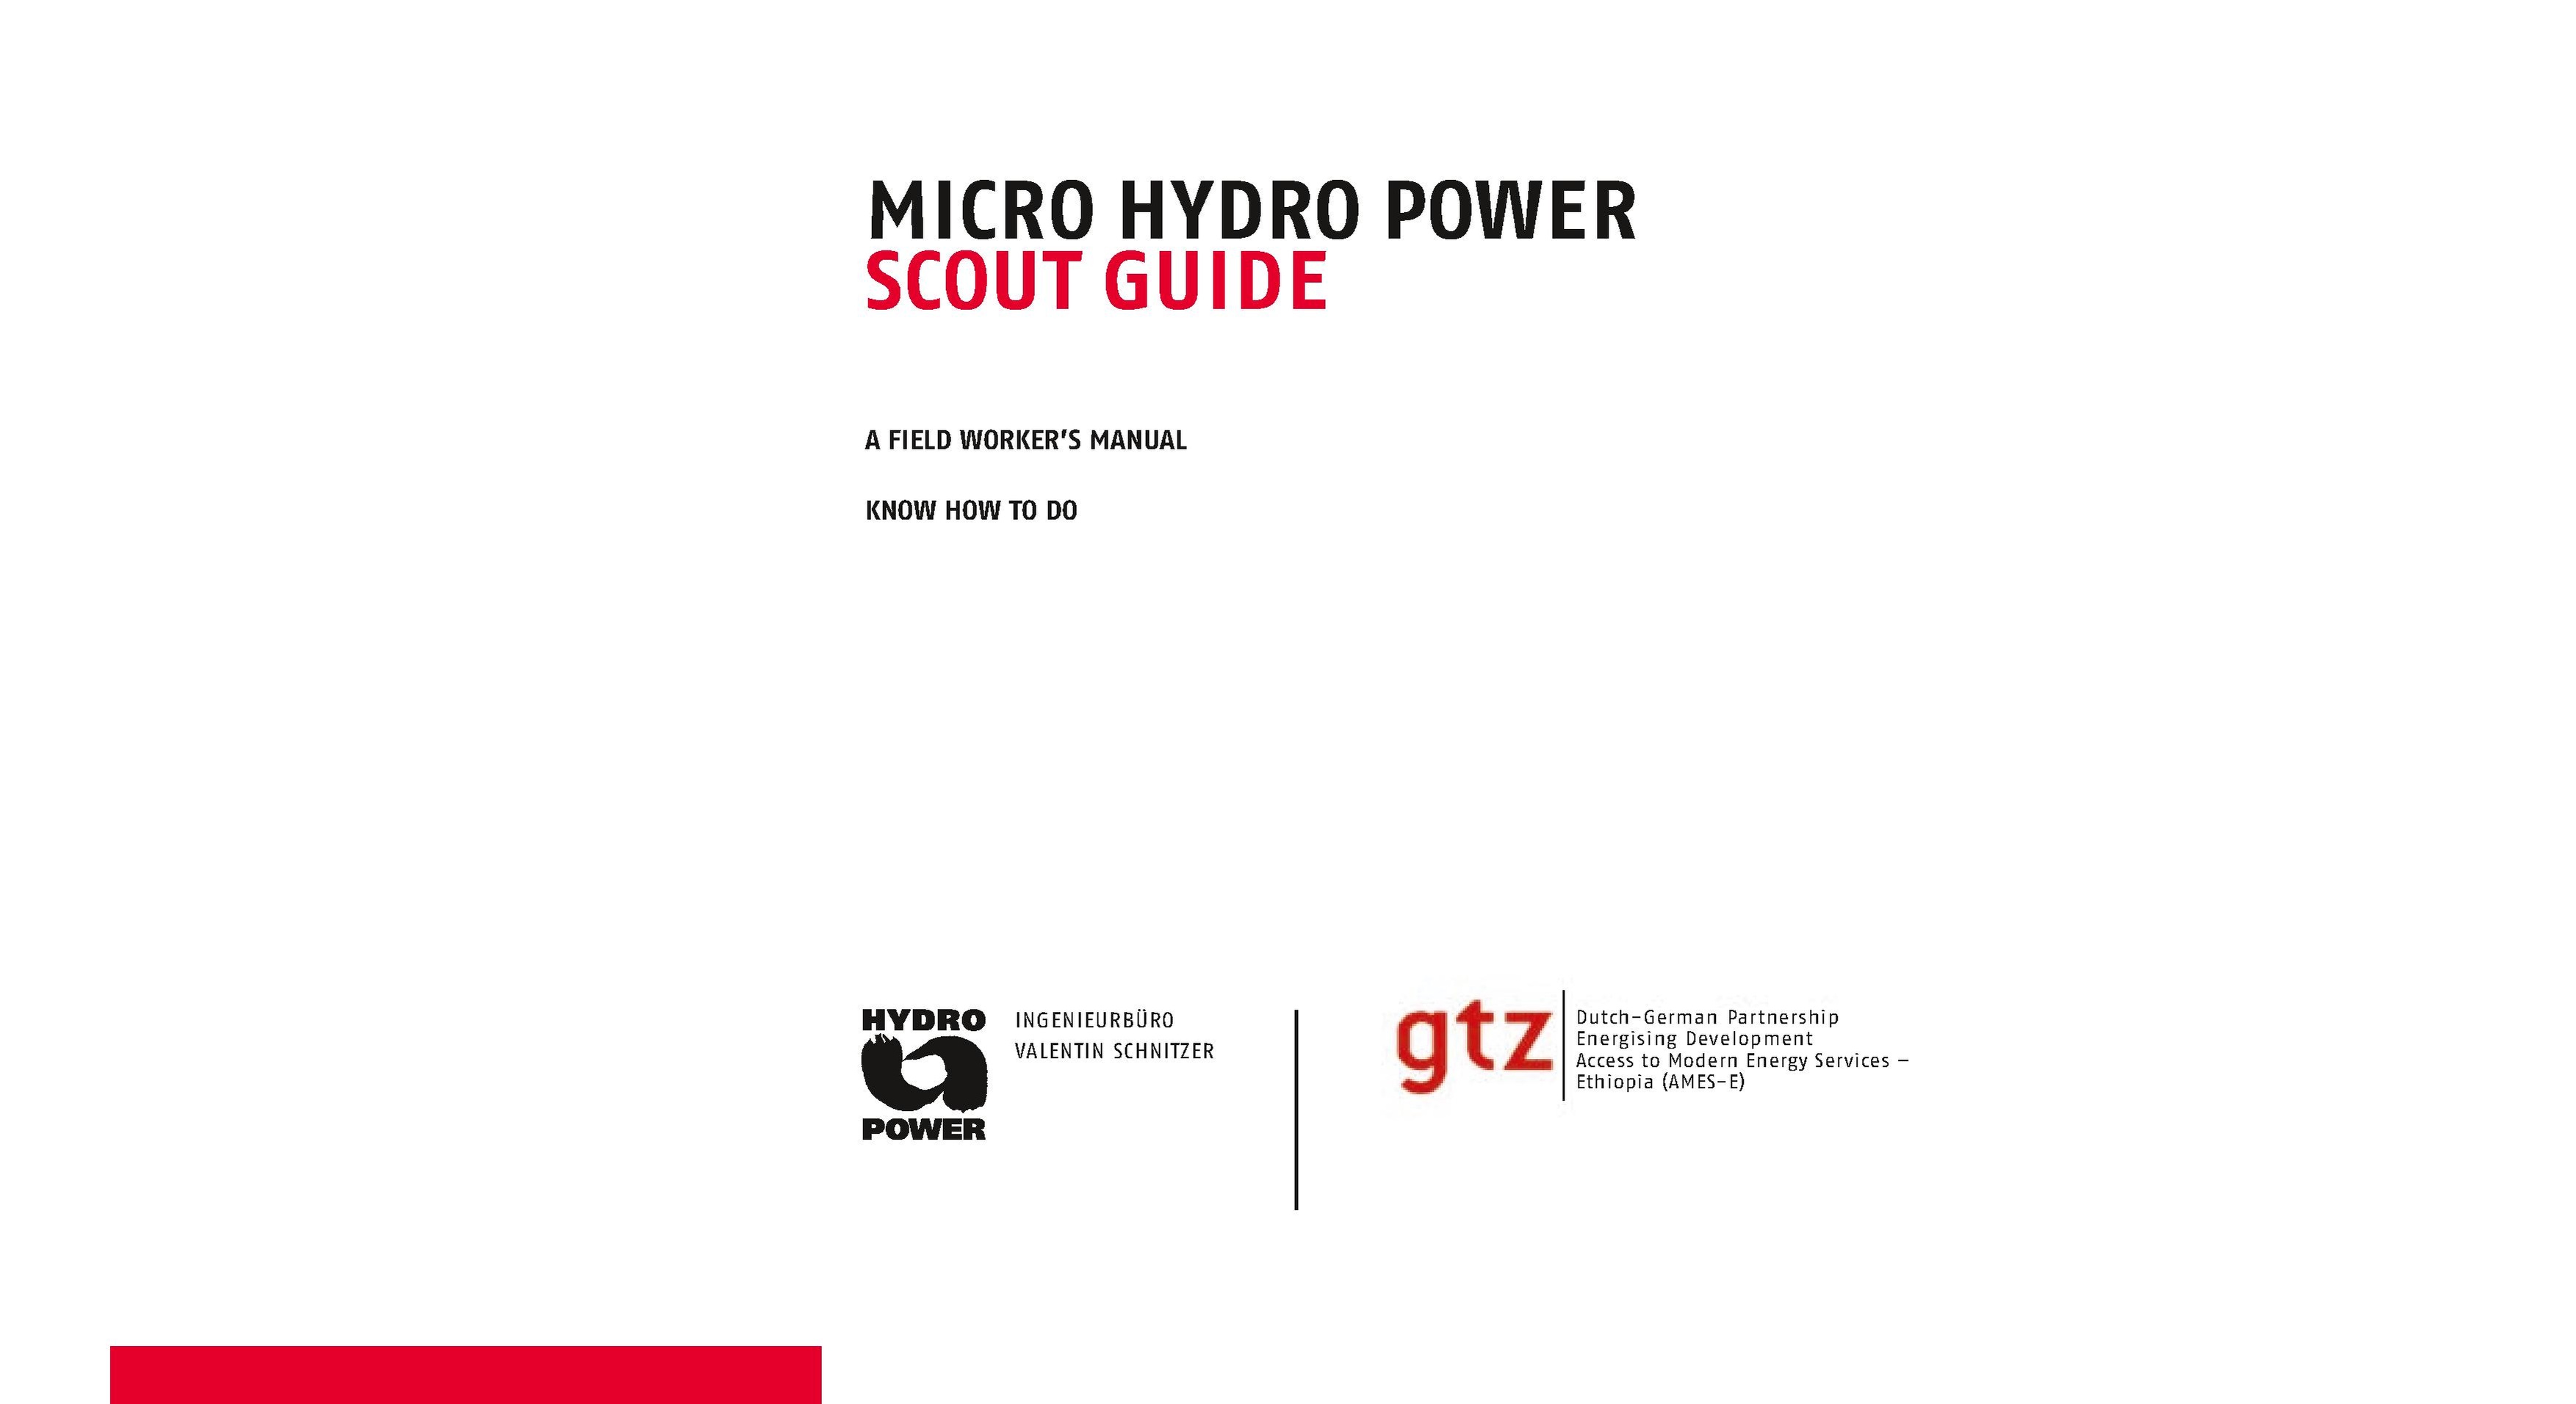 GIZ (2010). Micro Hydro Power Scout Guide.